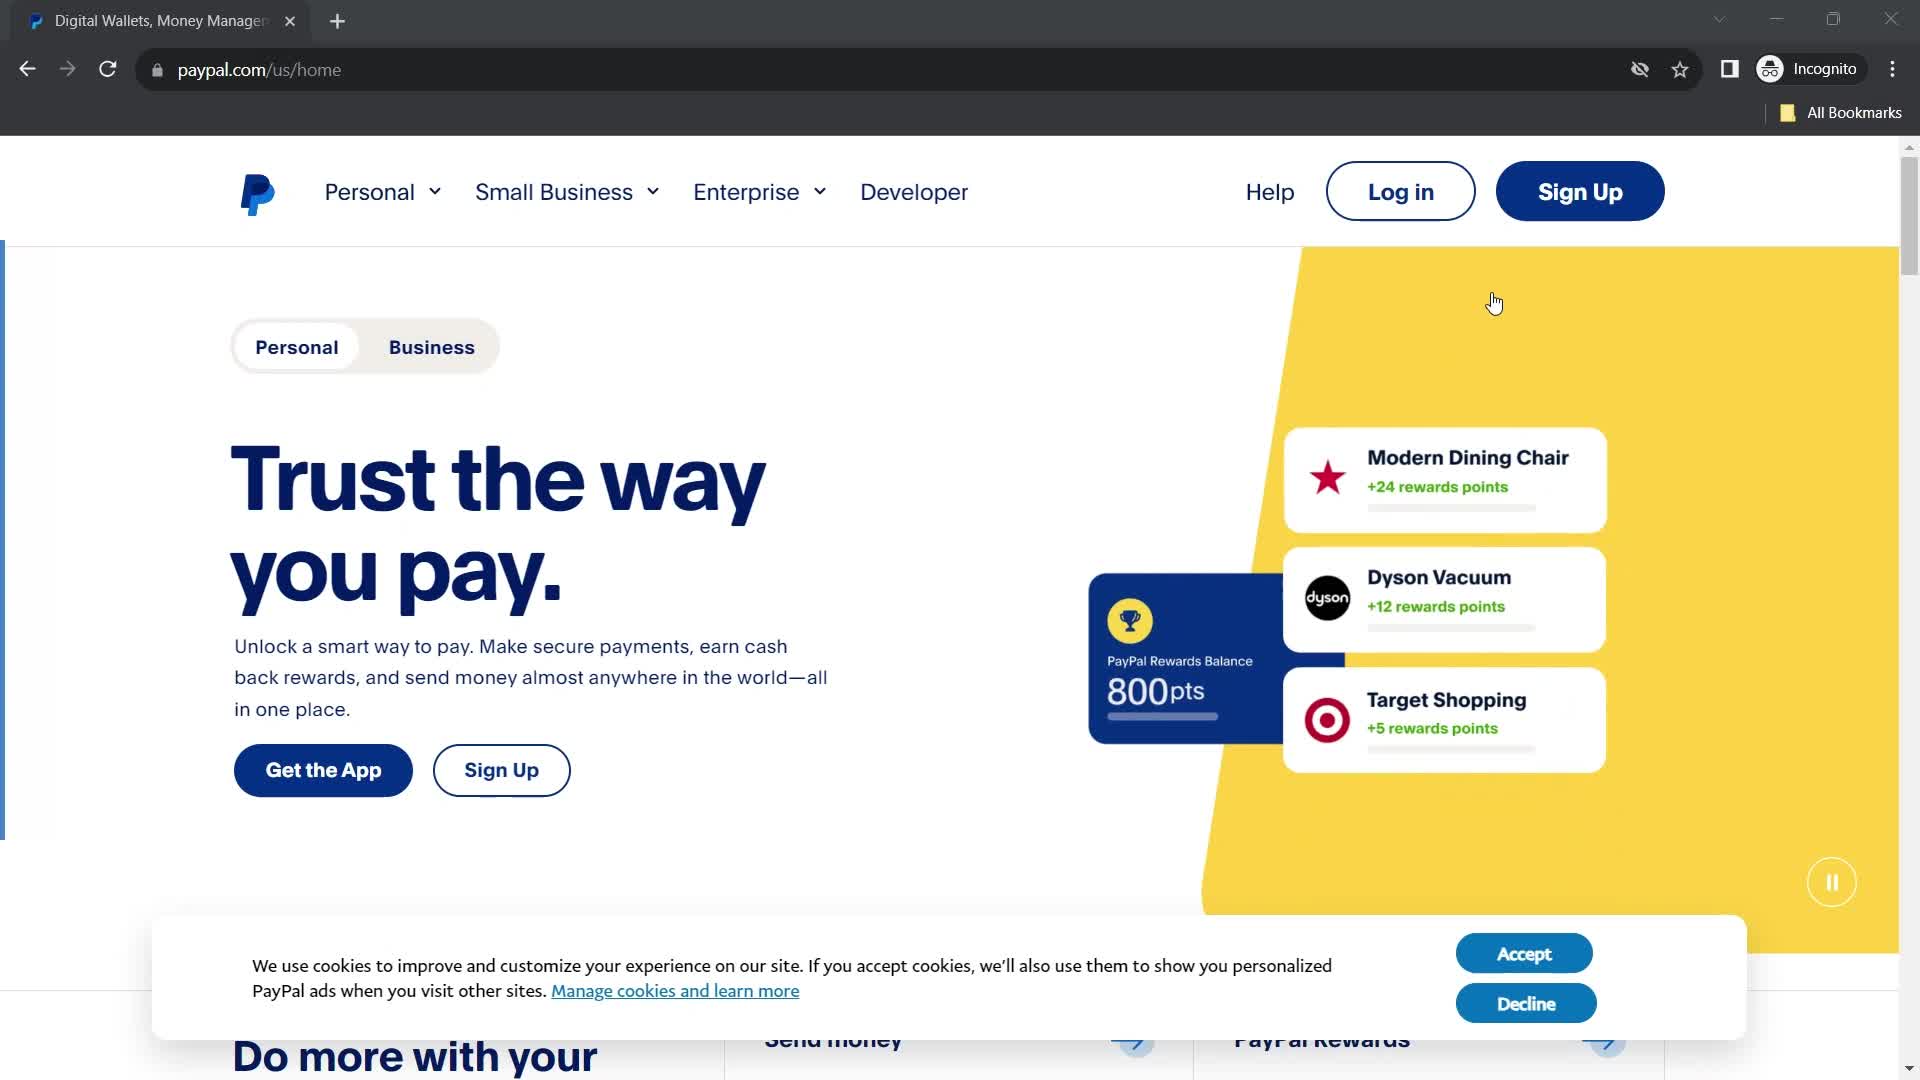 PayPal homepage screenshot